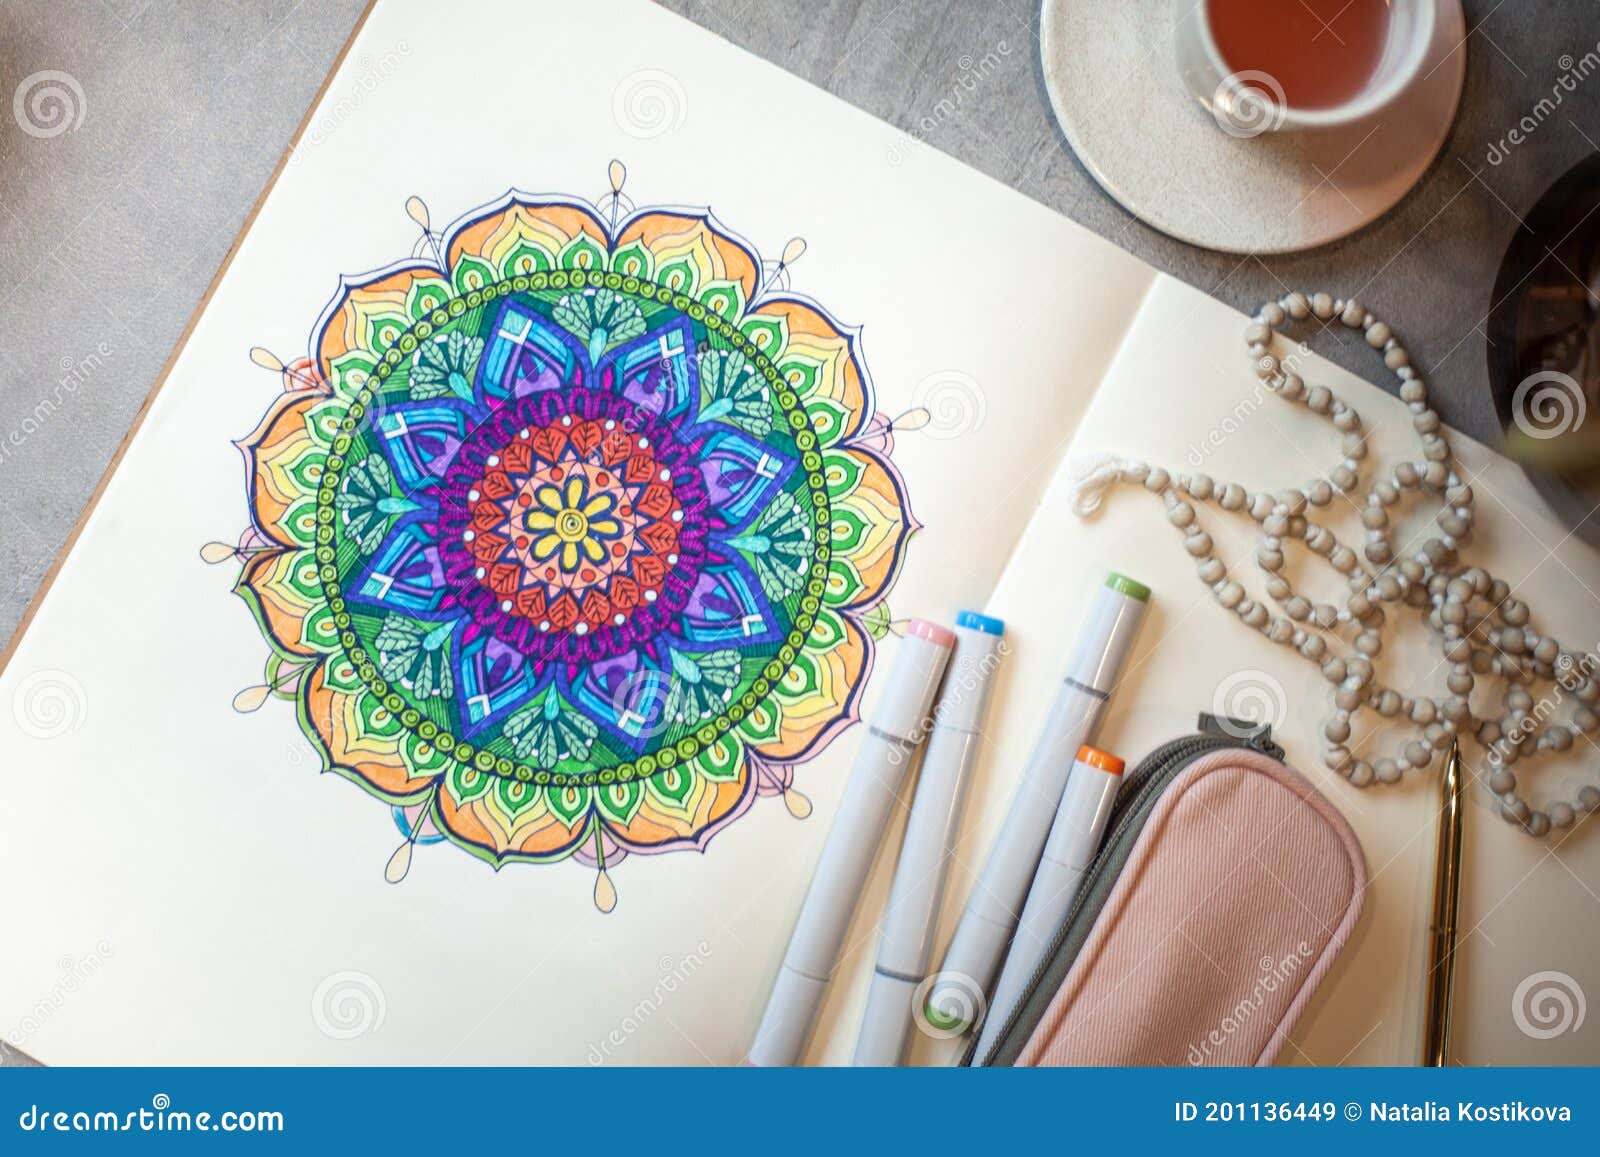 https://thumbs.dreamstime.com/z/top-view-colored-mandala-art-book-colorful-markers-pen-pink-pen-case-rosary-beads-concept-coloring-mandalas-as-201136449.jpg